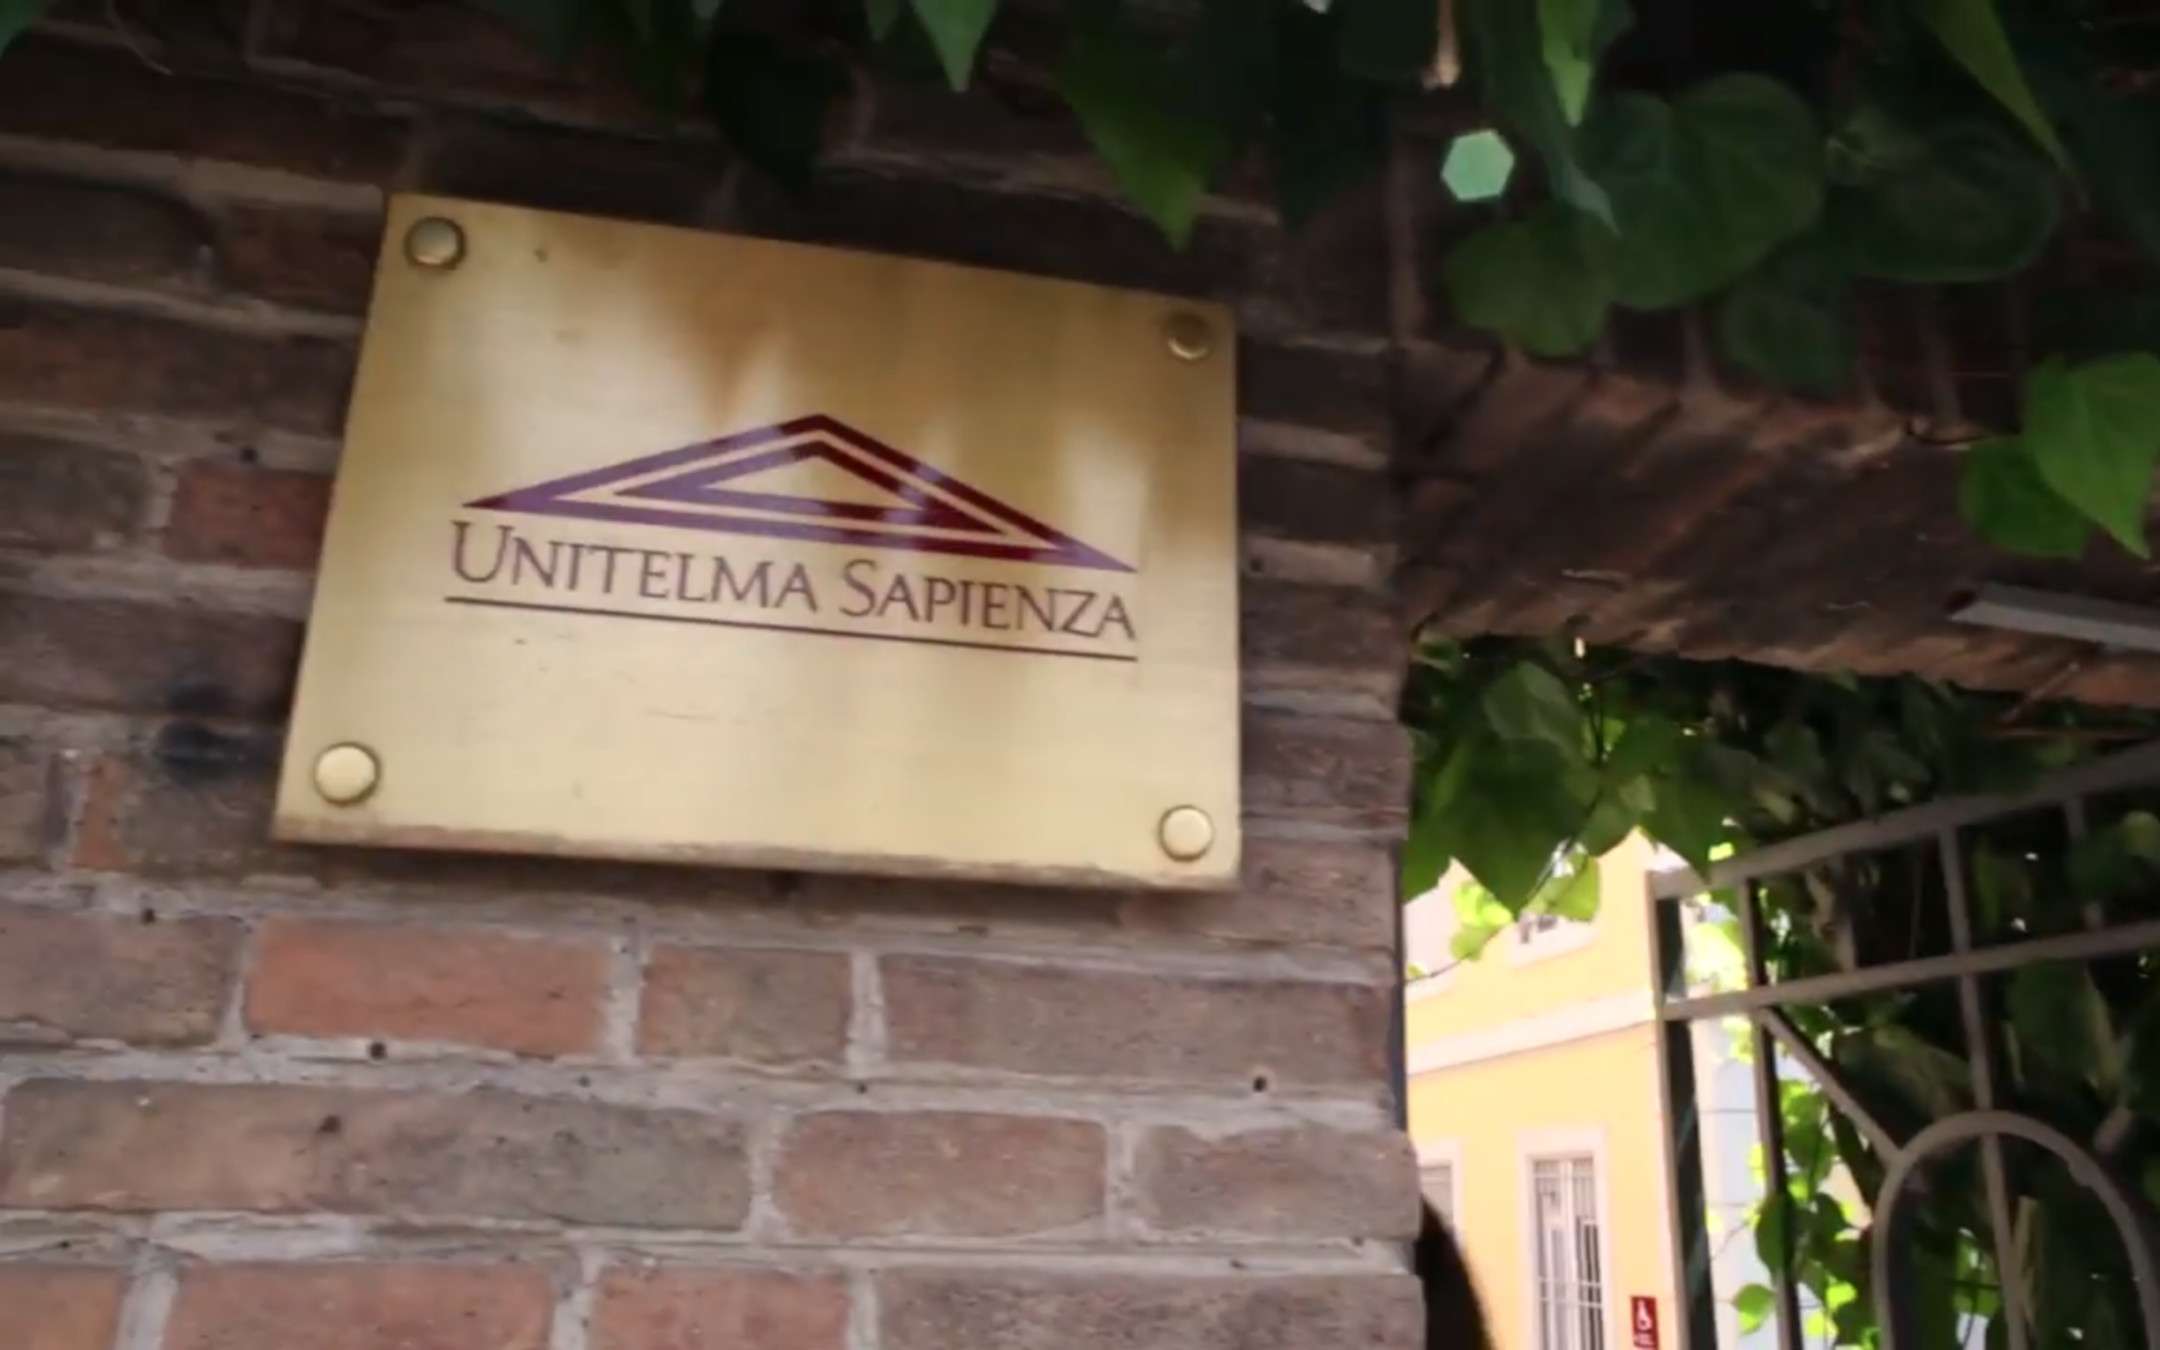 Unitelma Sapienza University: Details, Costs and Opinions